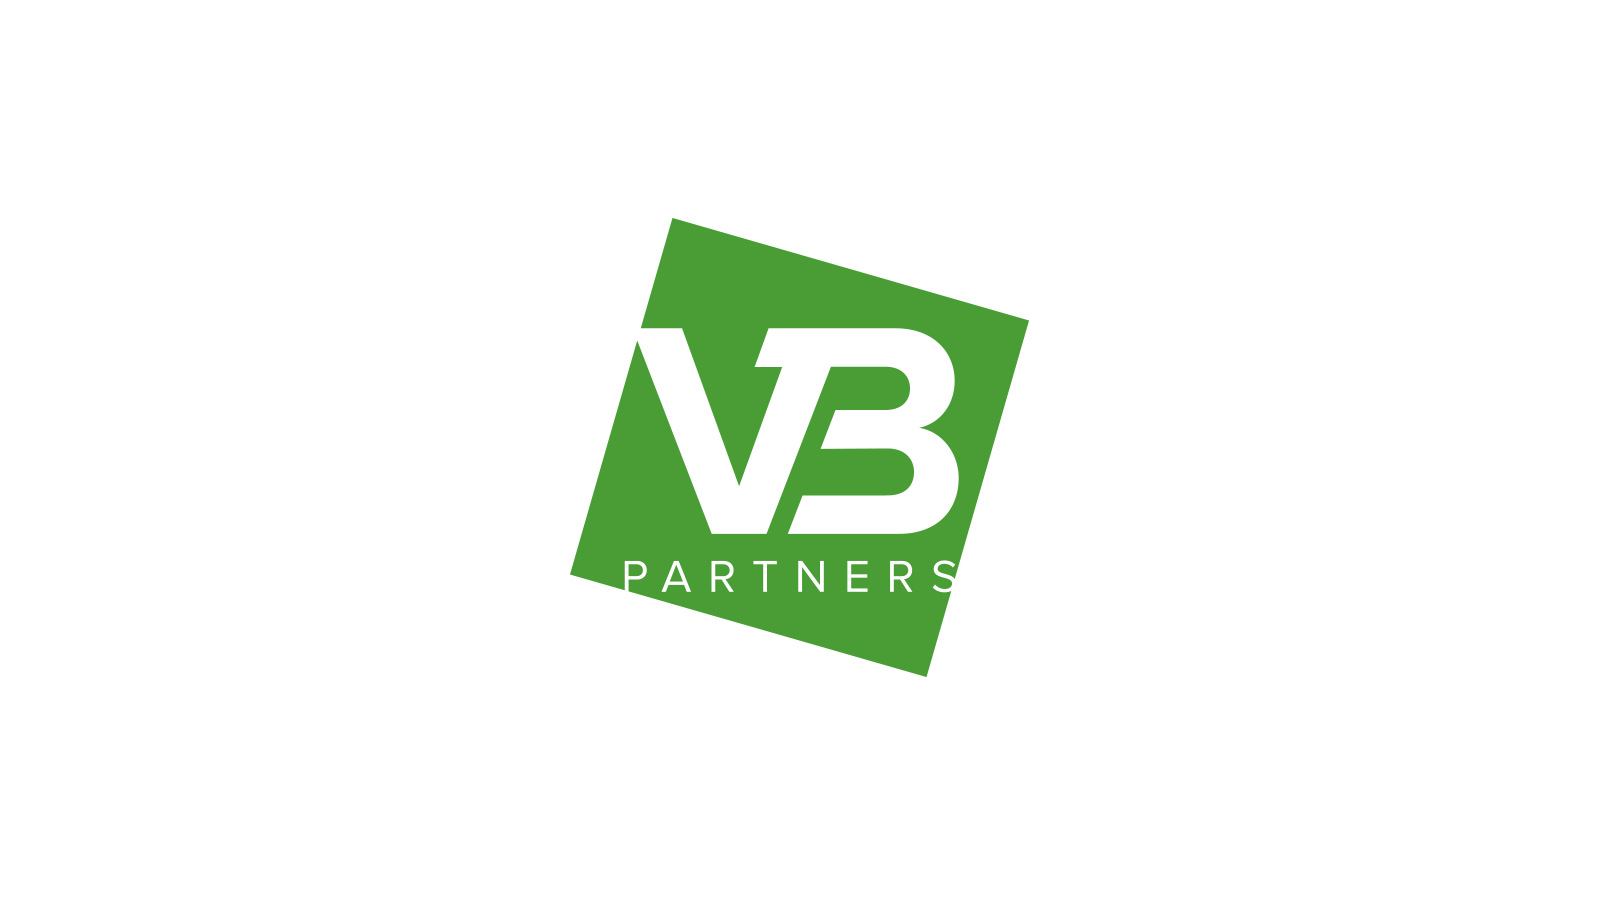 VB Partners logo